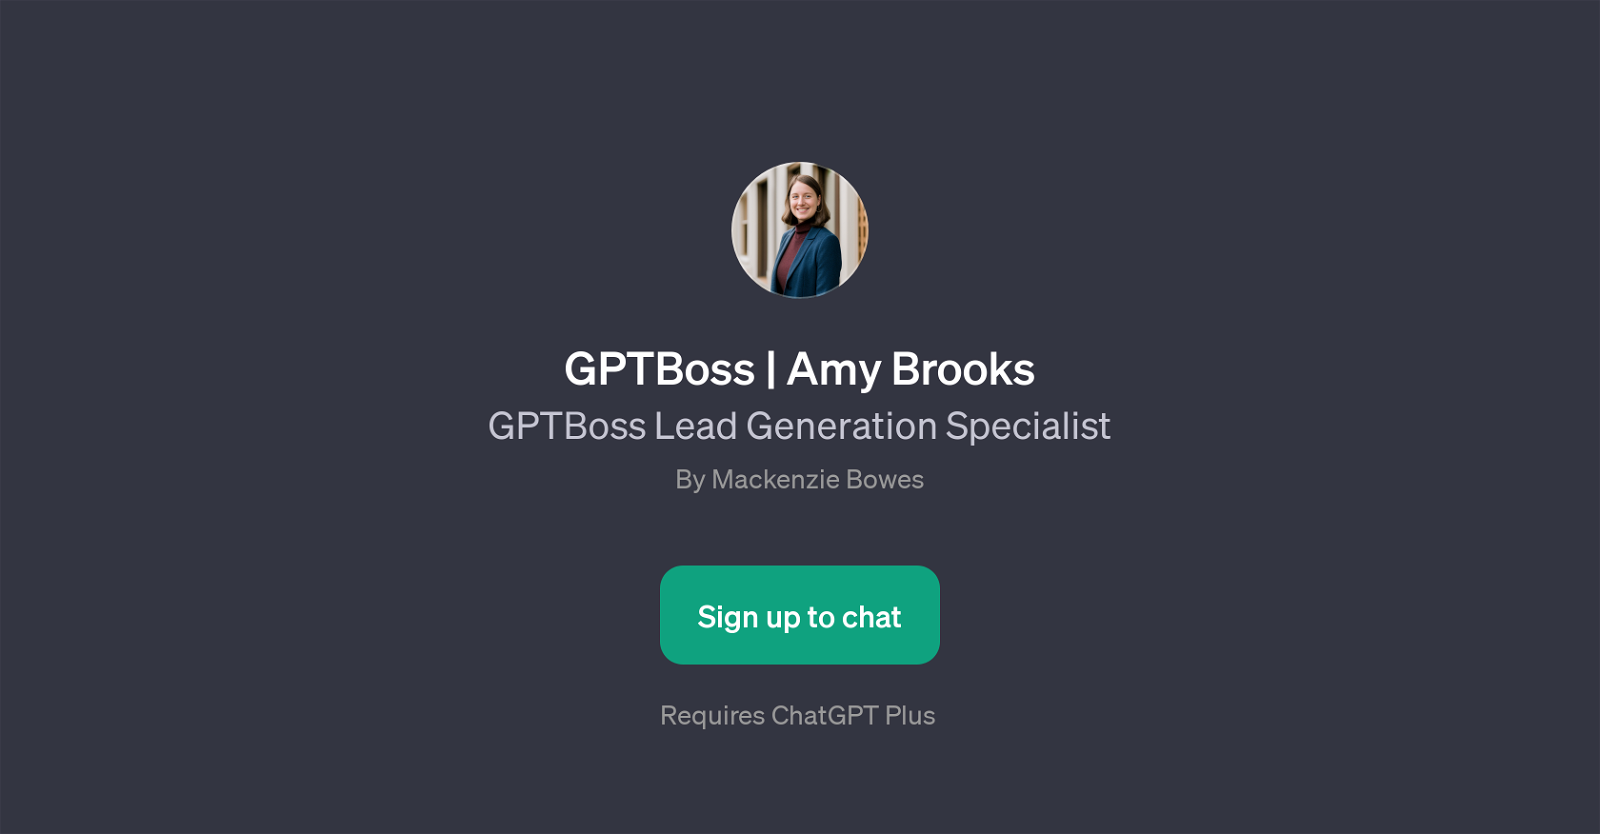 GPTBoss | Amy Brooks website